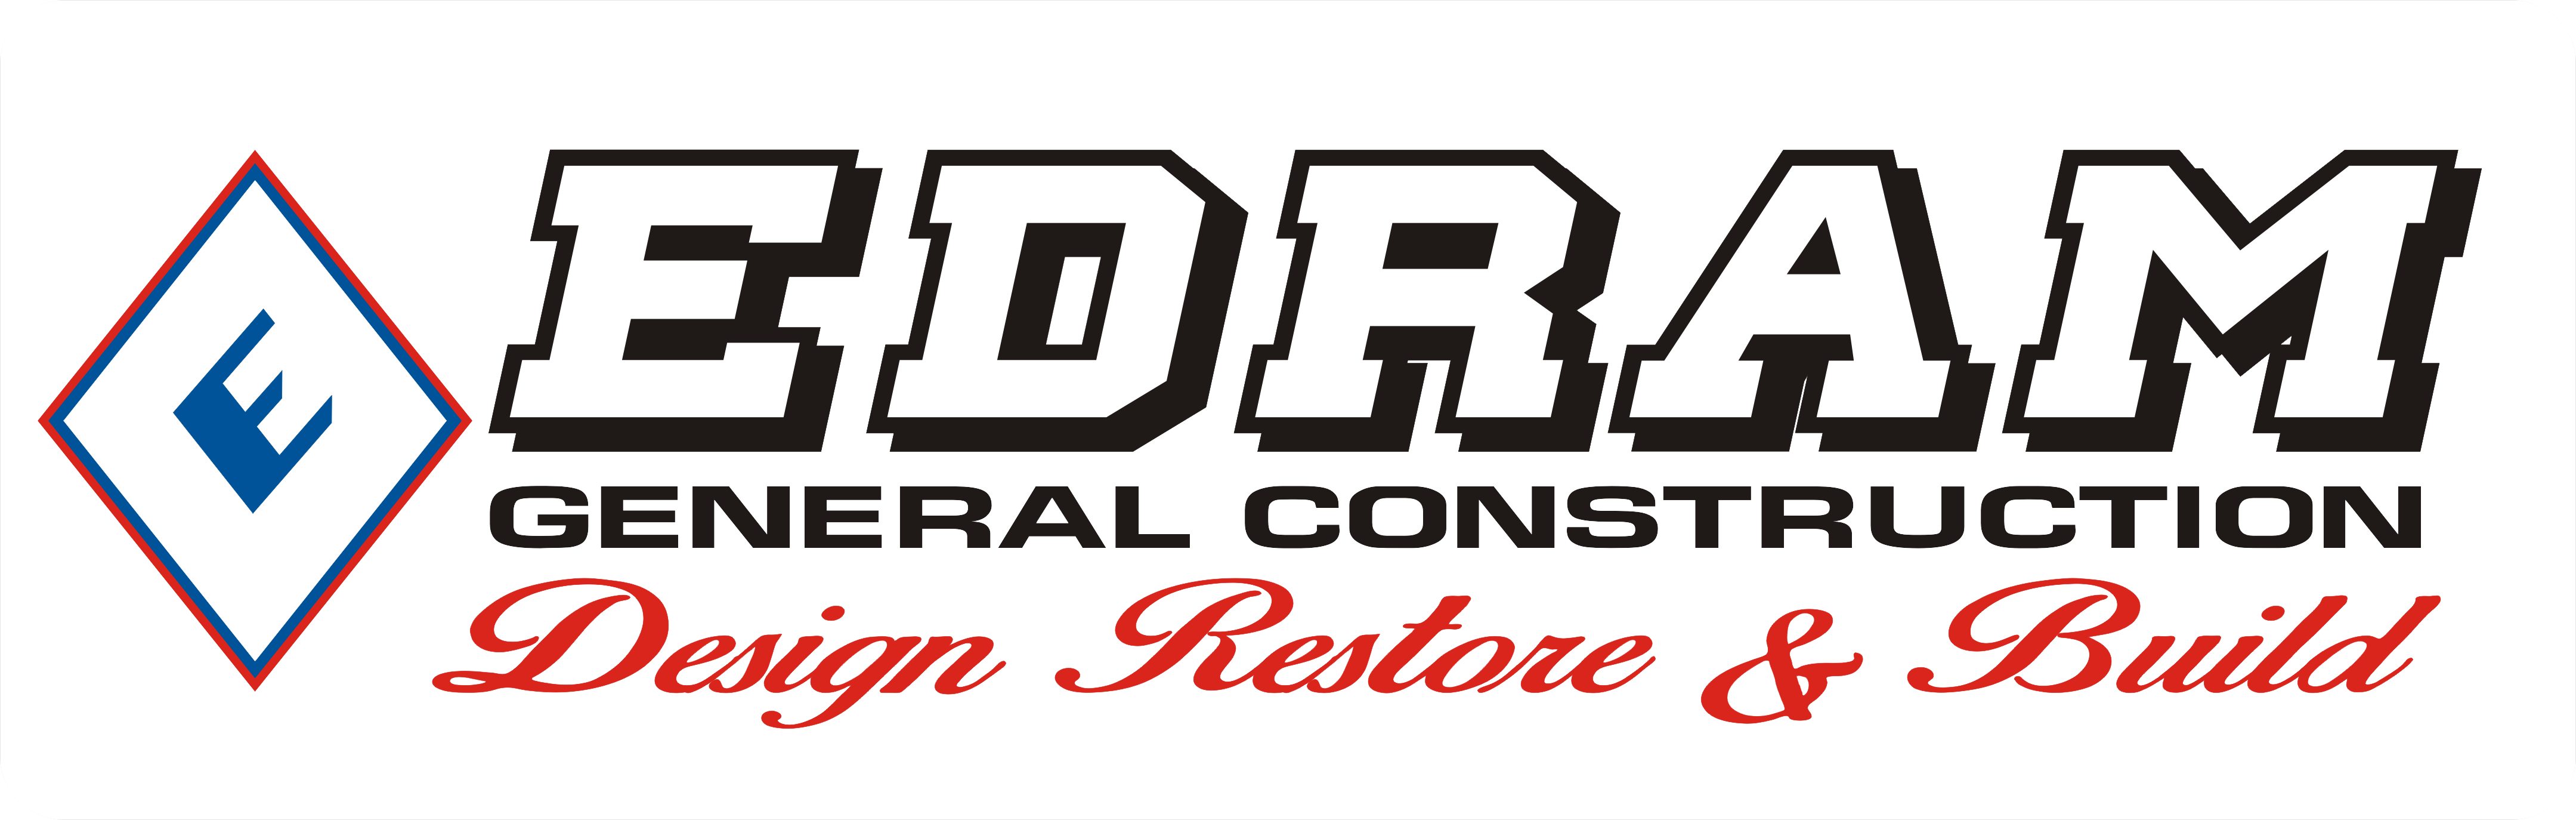 Edram General Construction LLC